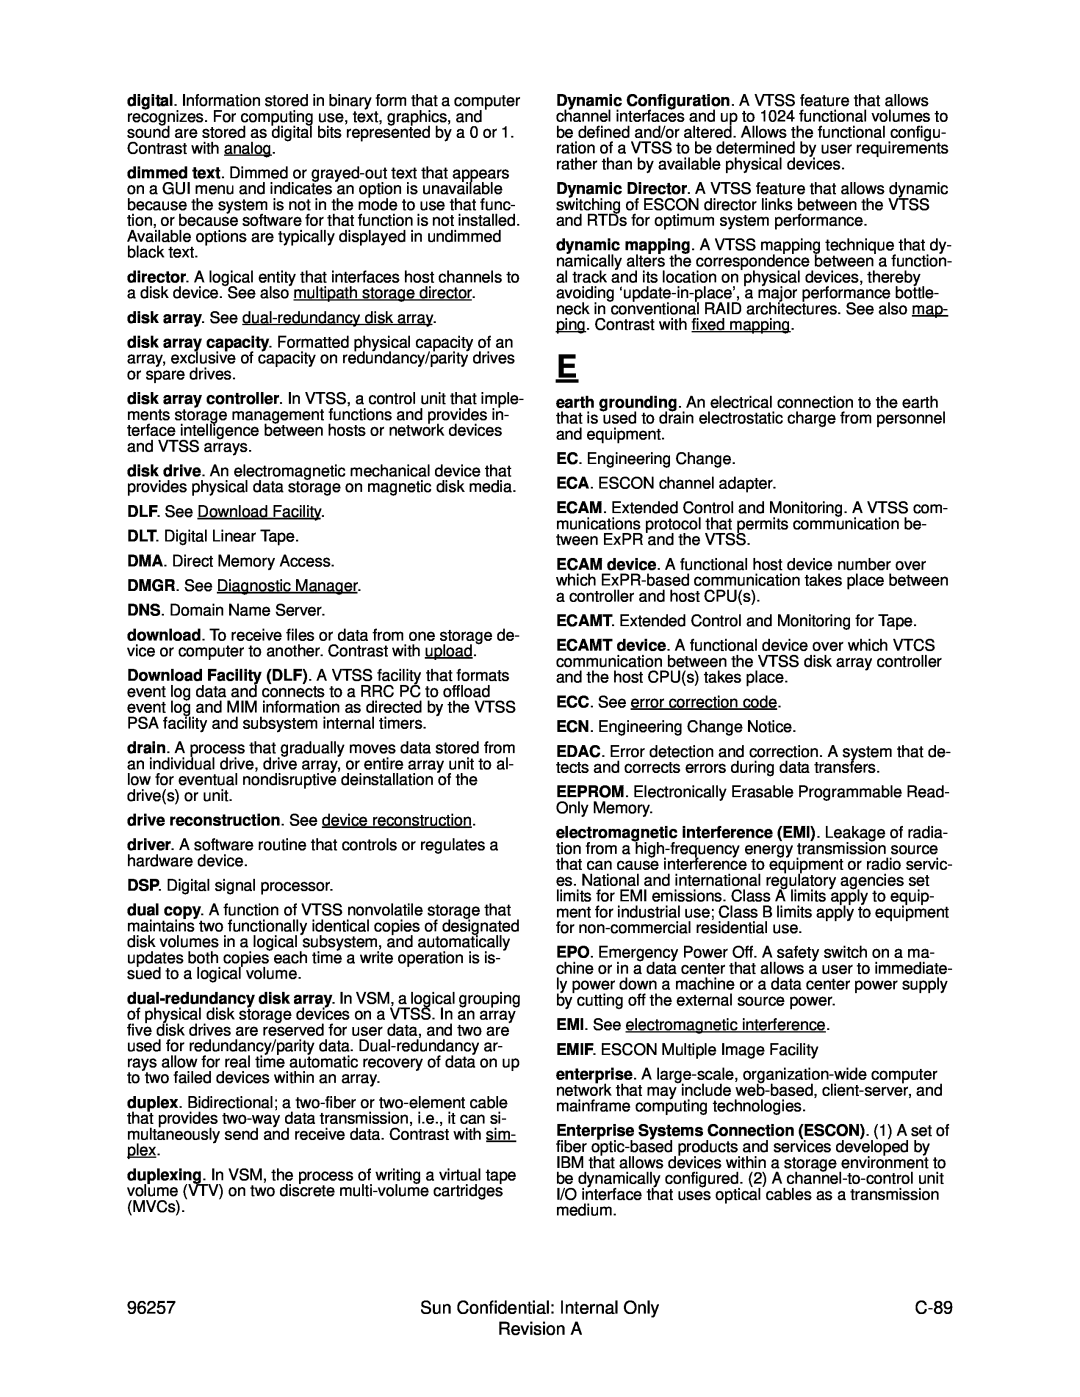 Sun Microsystems 96257 manual 